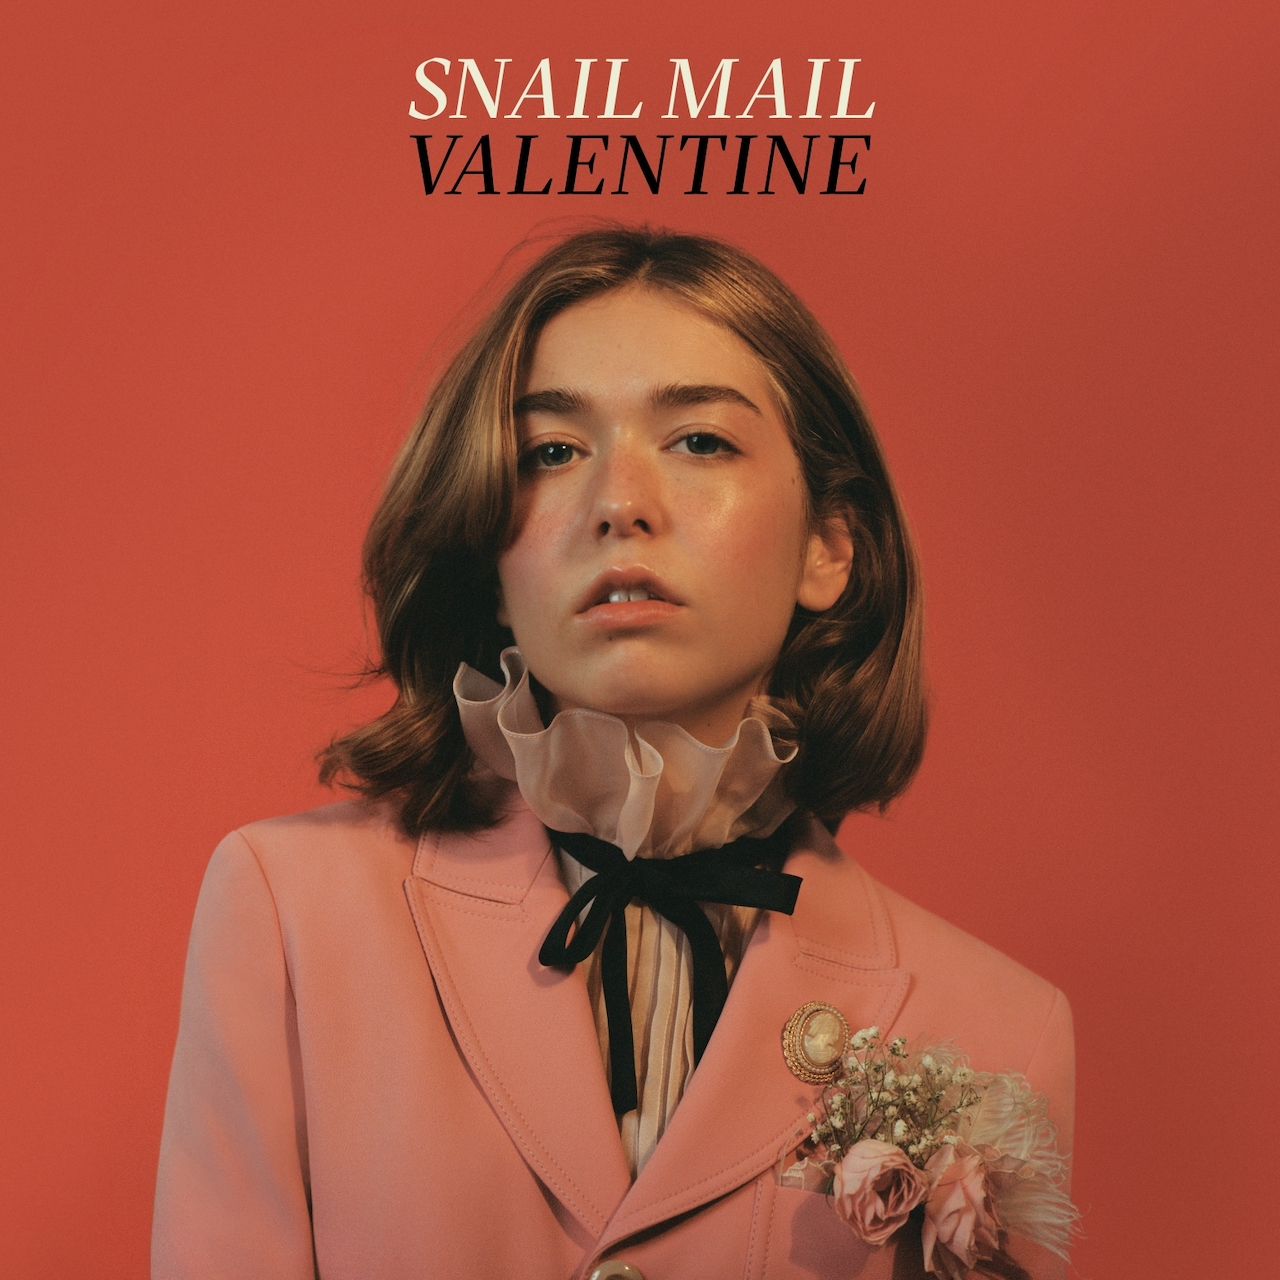 Snail Mail - "Valentine"